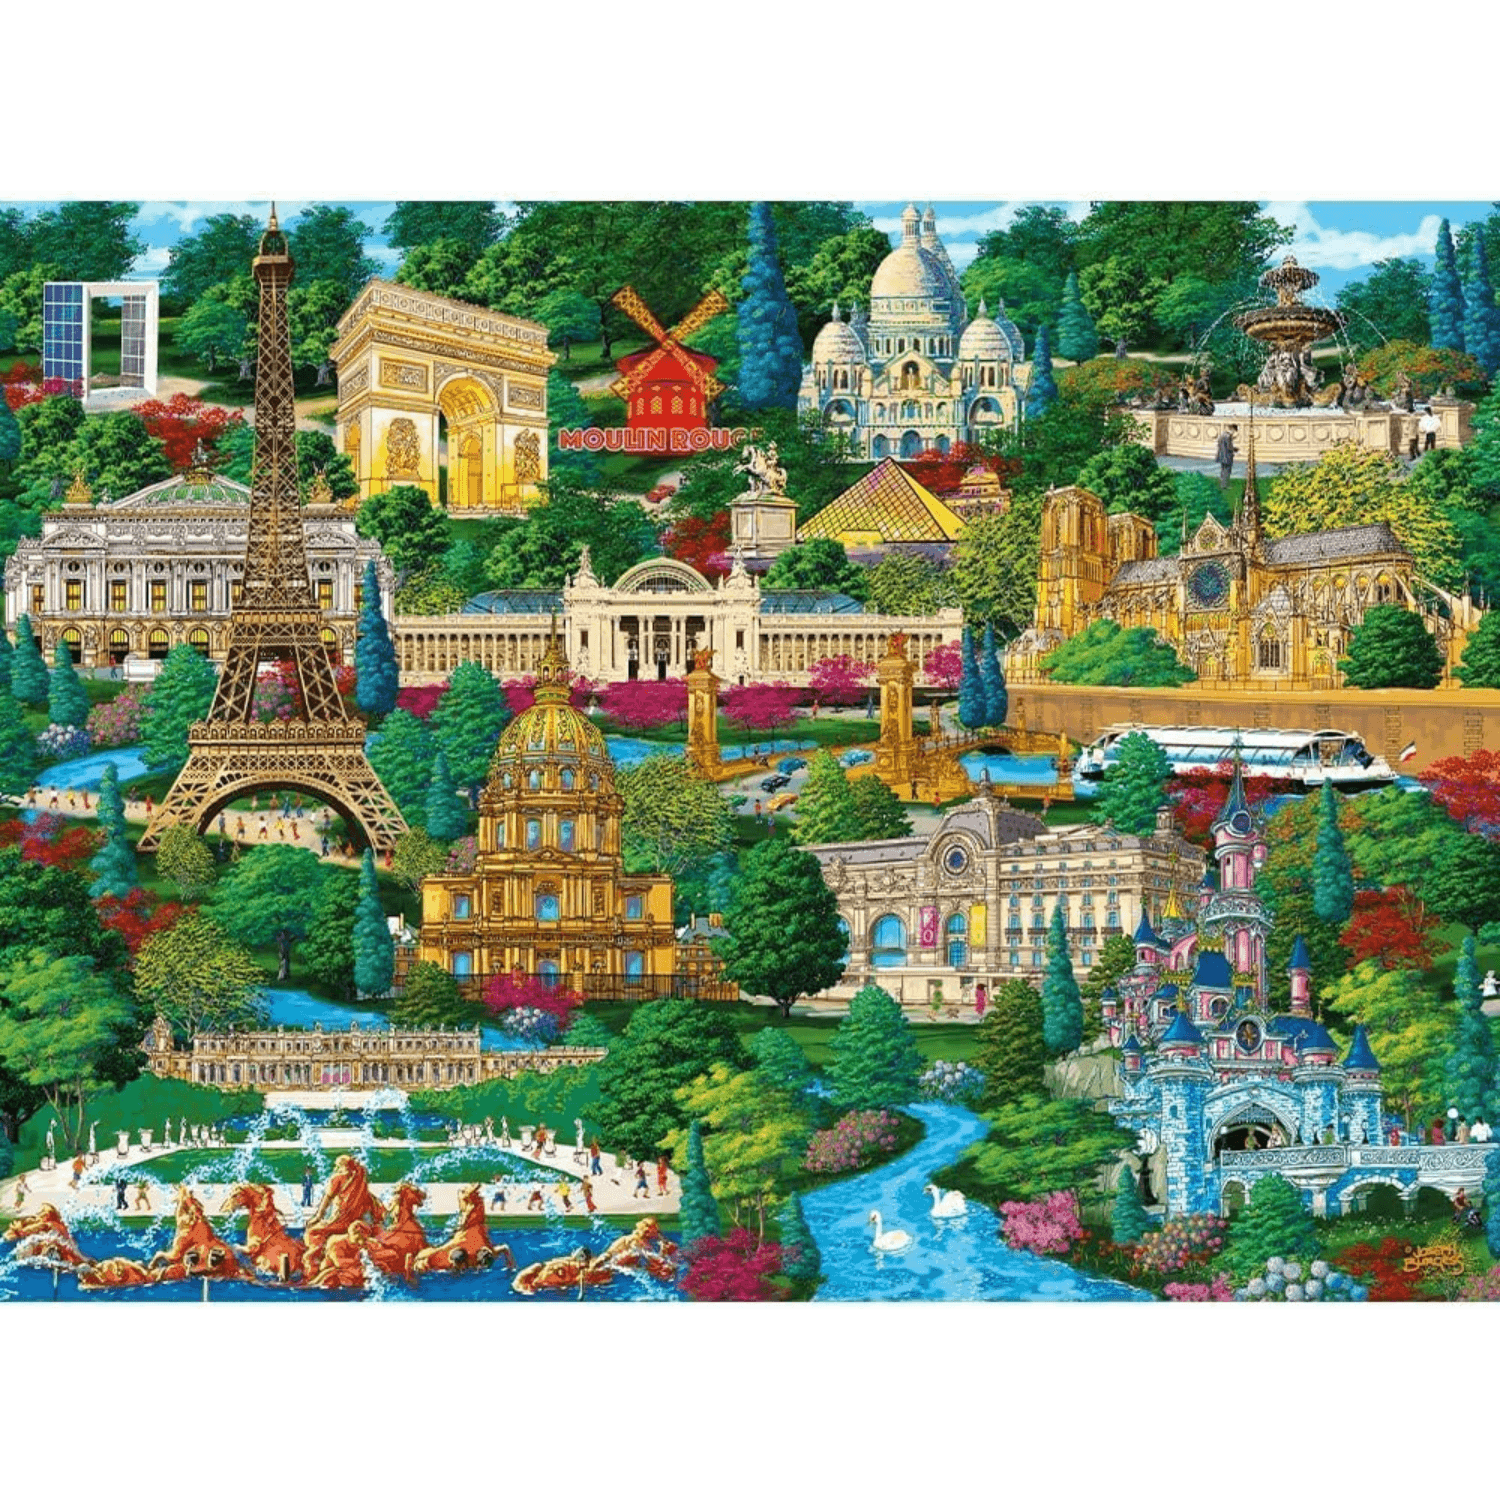 Trefl 1000 Piece Jigsaw Puzzle Animals Landscapes Cities